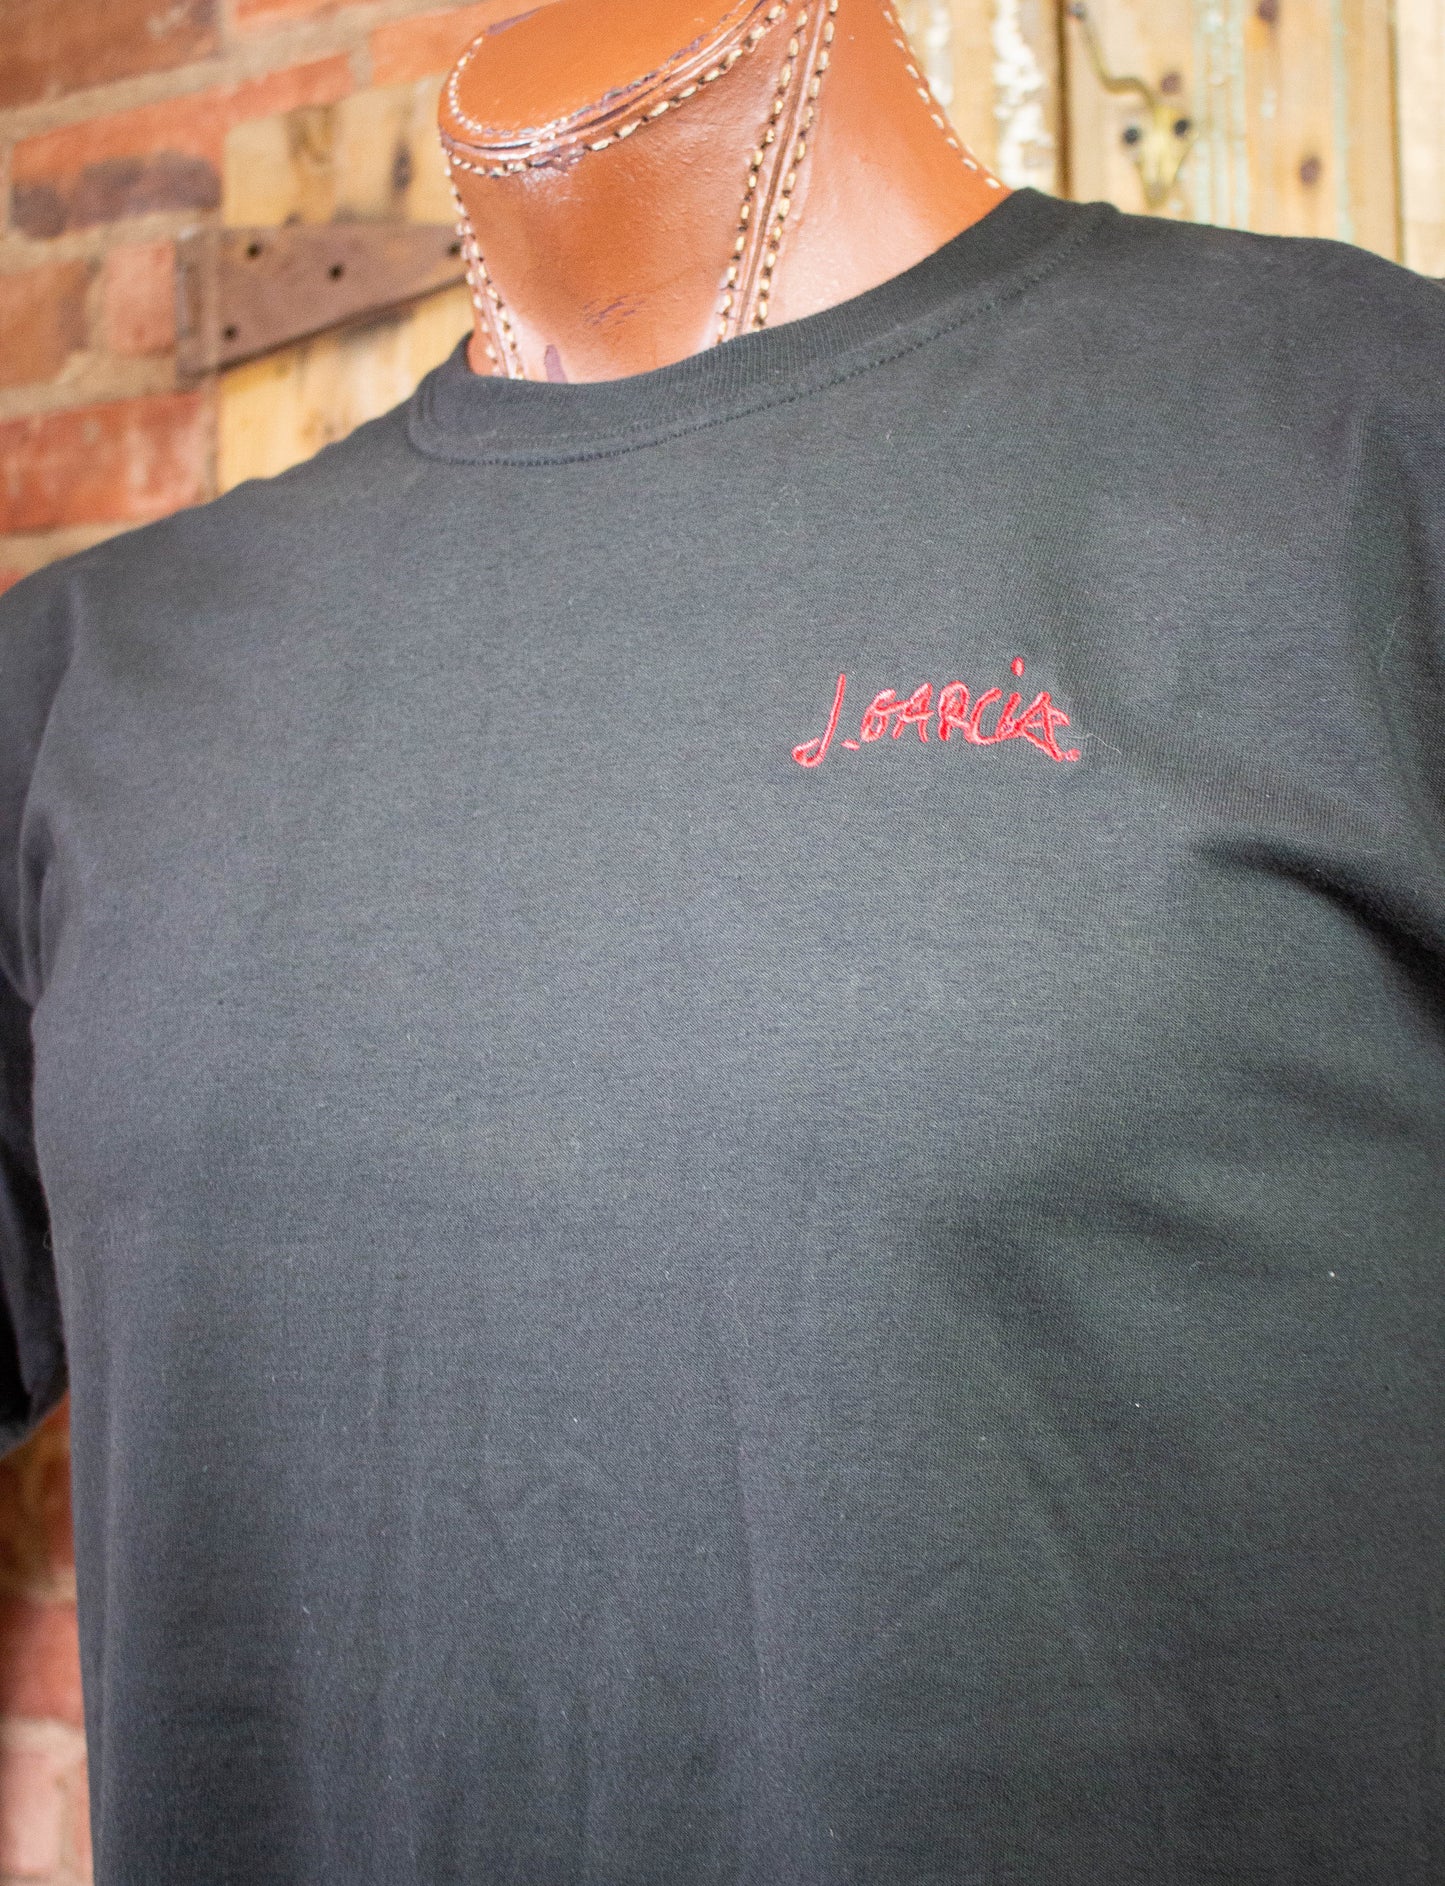 Vintage Jerry Garcia Embroidered Concert T-Shirt 90s Black M